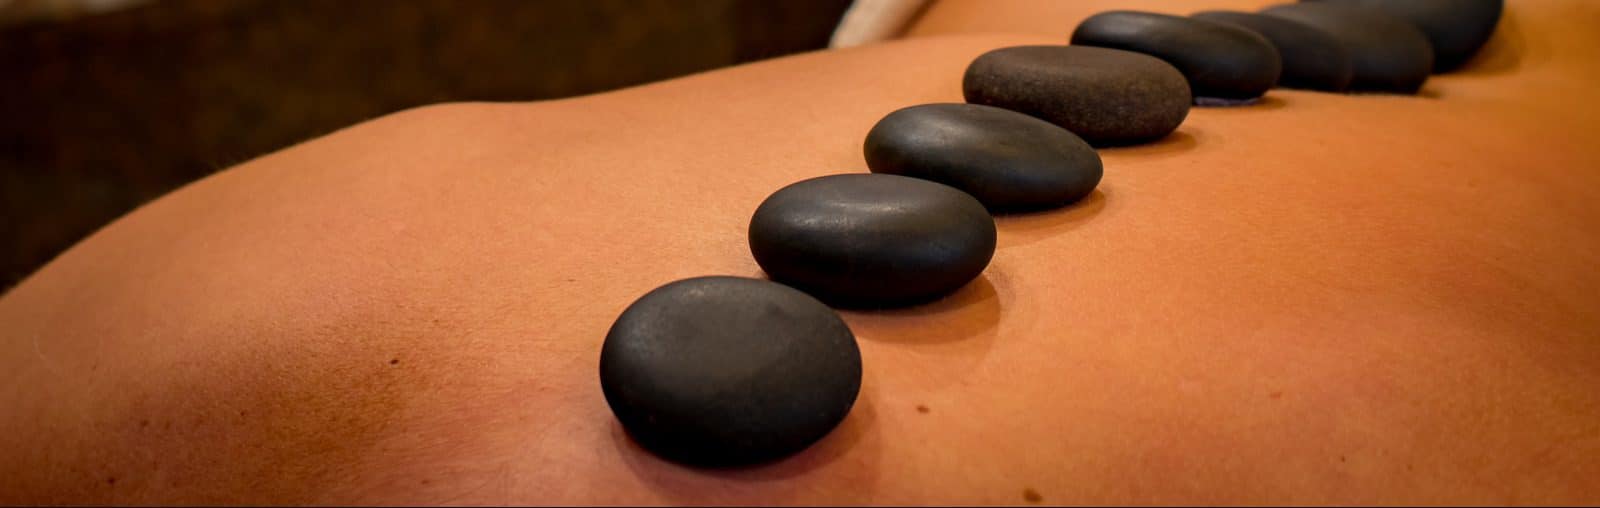 Hot Stones Massage Phoenix Health And Wellbeing